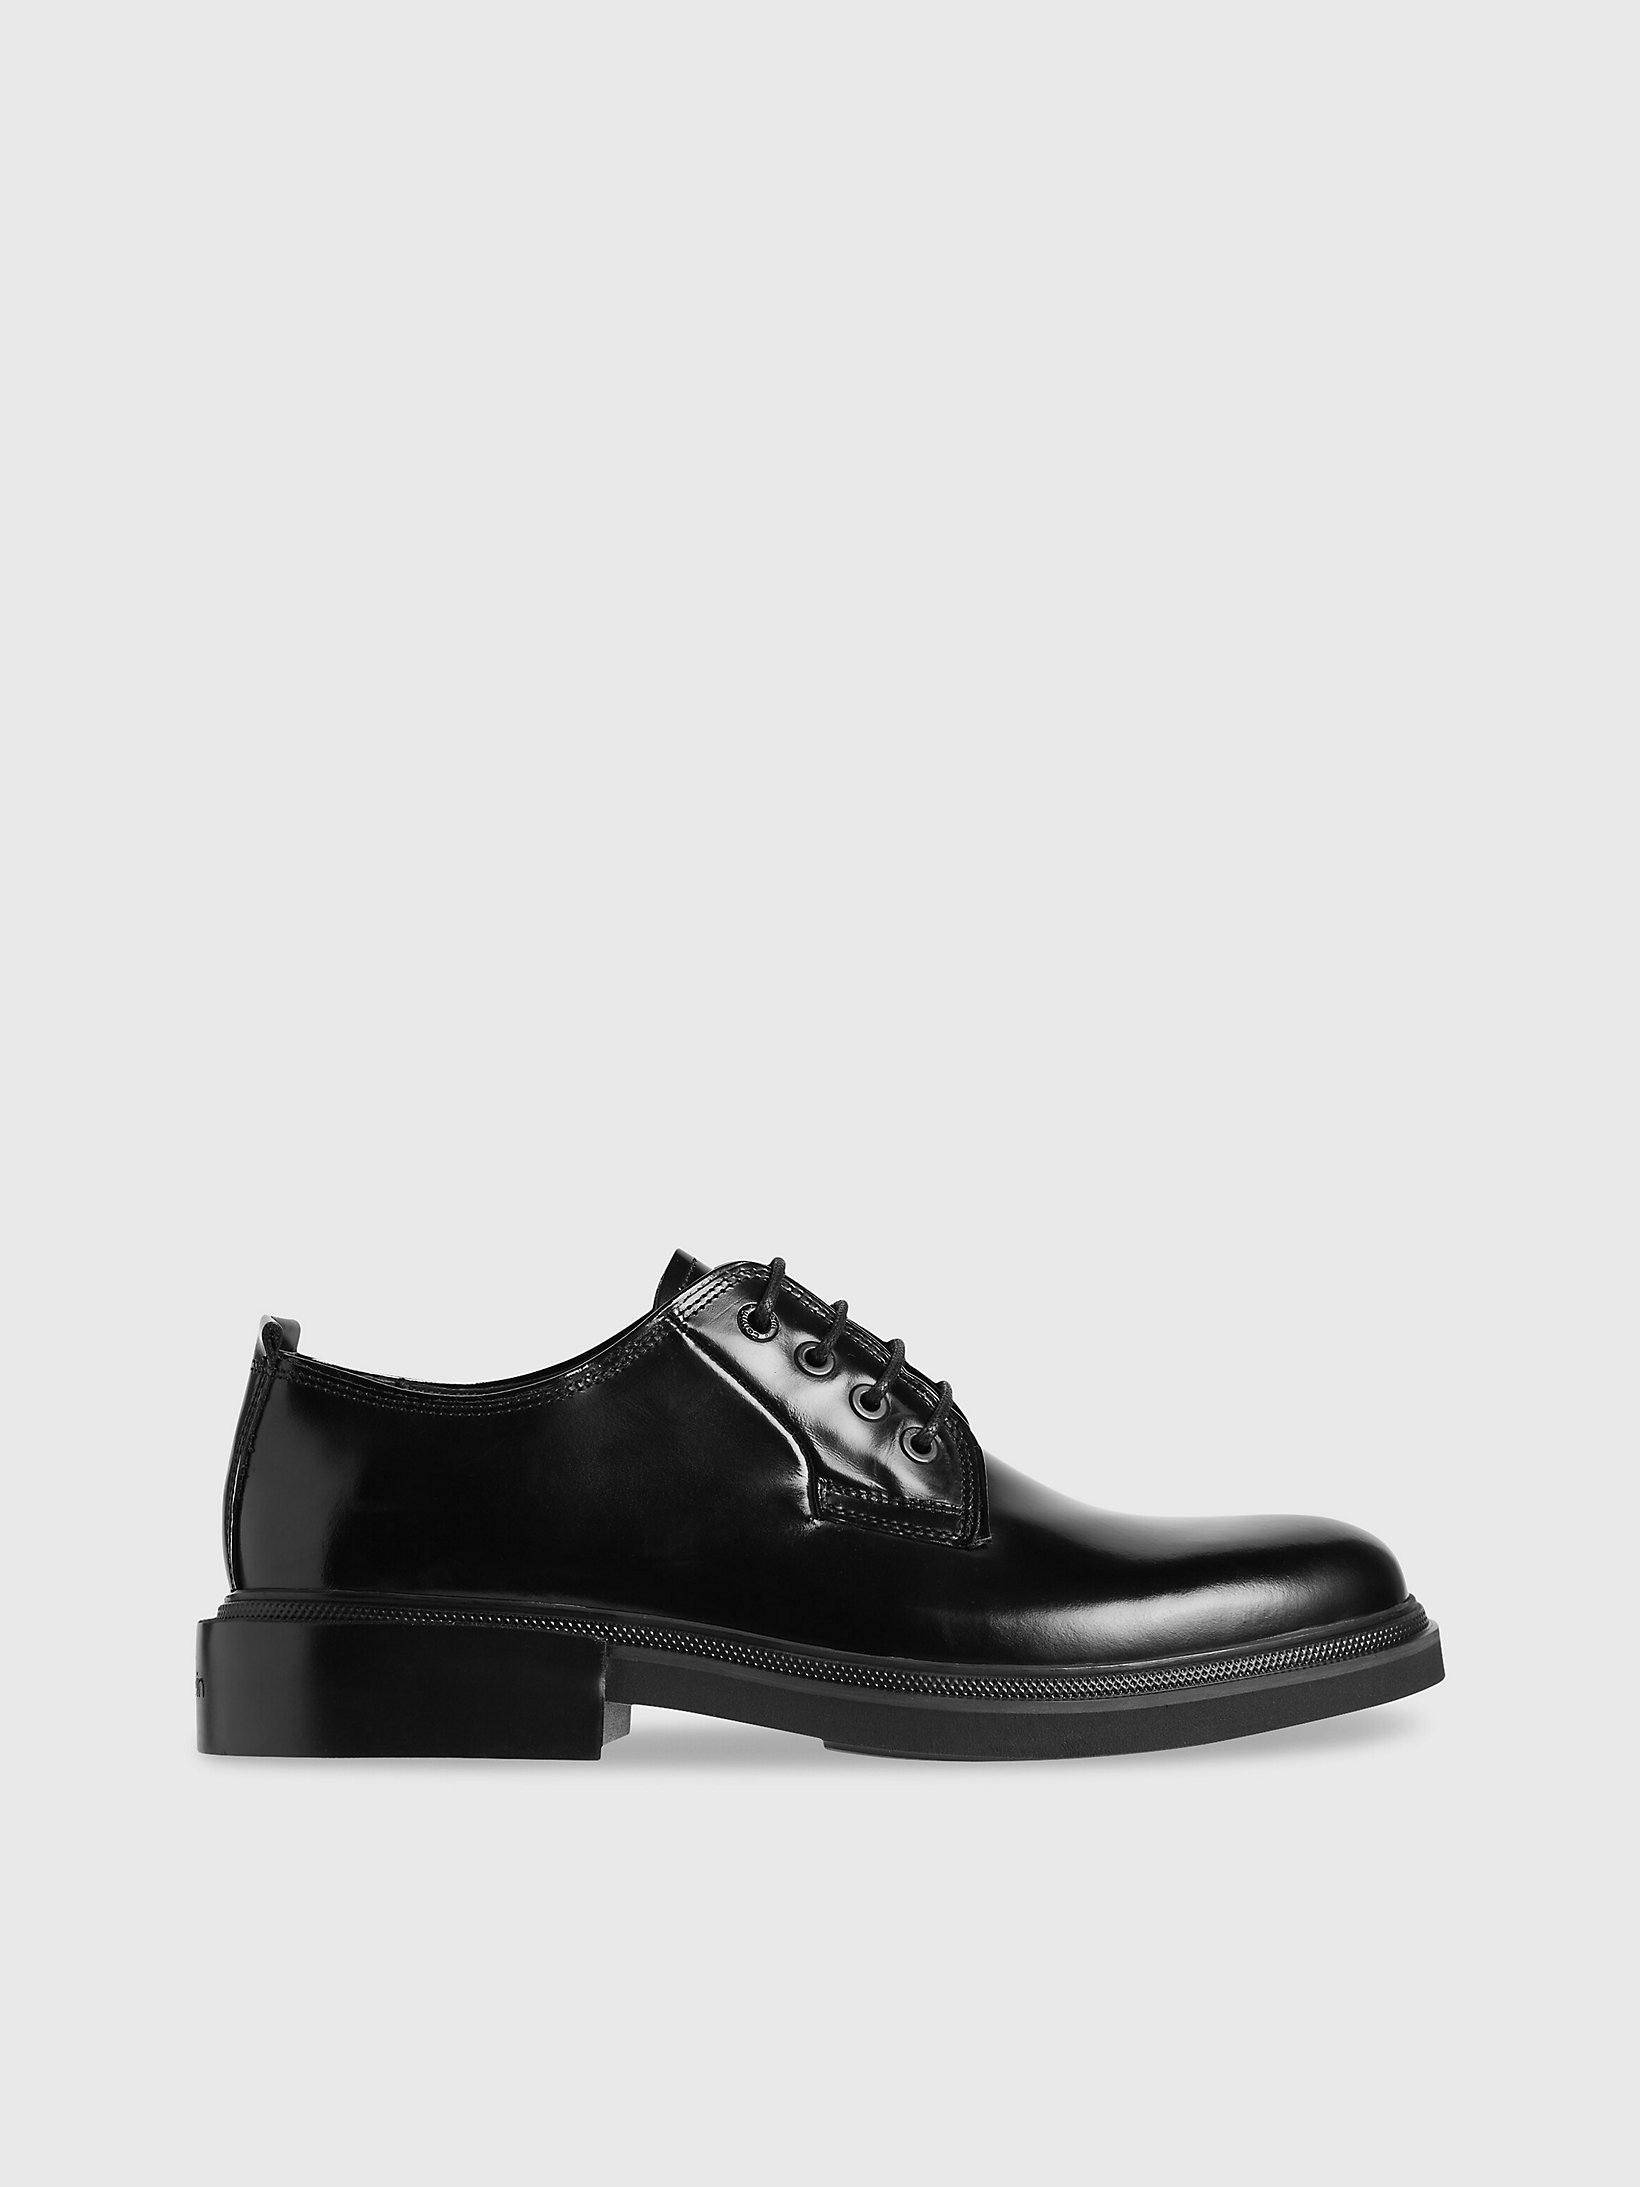 Pvh Black Leather Lace-Up Shoes undefined men Calvin Klein